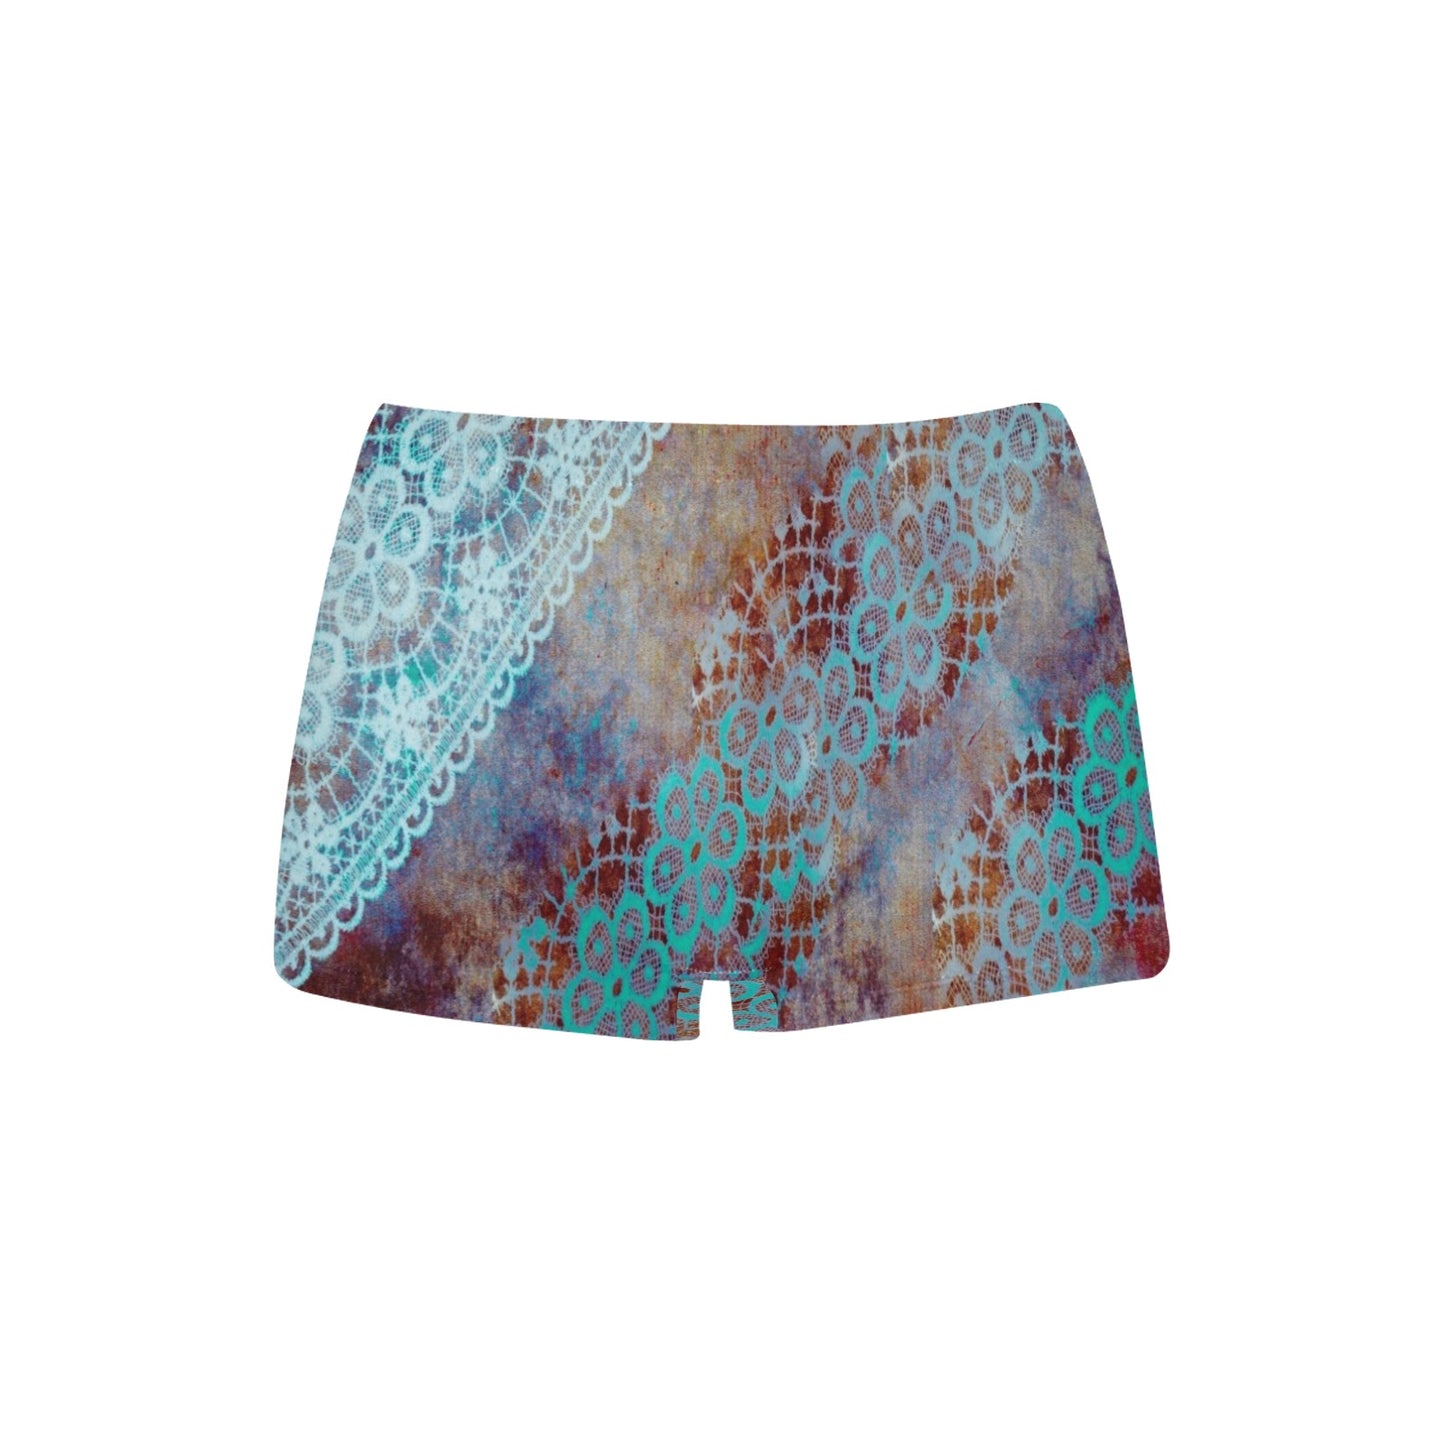 Printed Lace Boyshorts, daisy dukes, pum pum shorts, shortie shorts , design 37